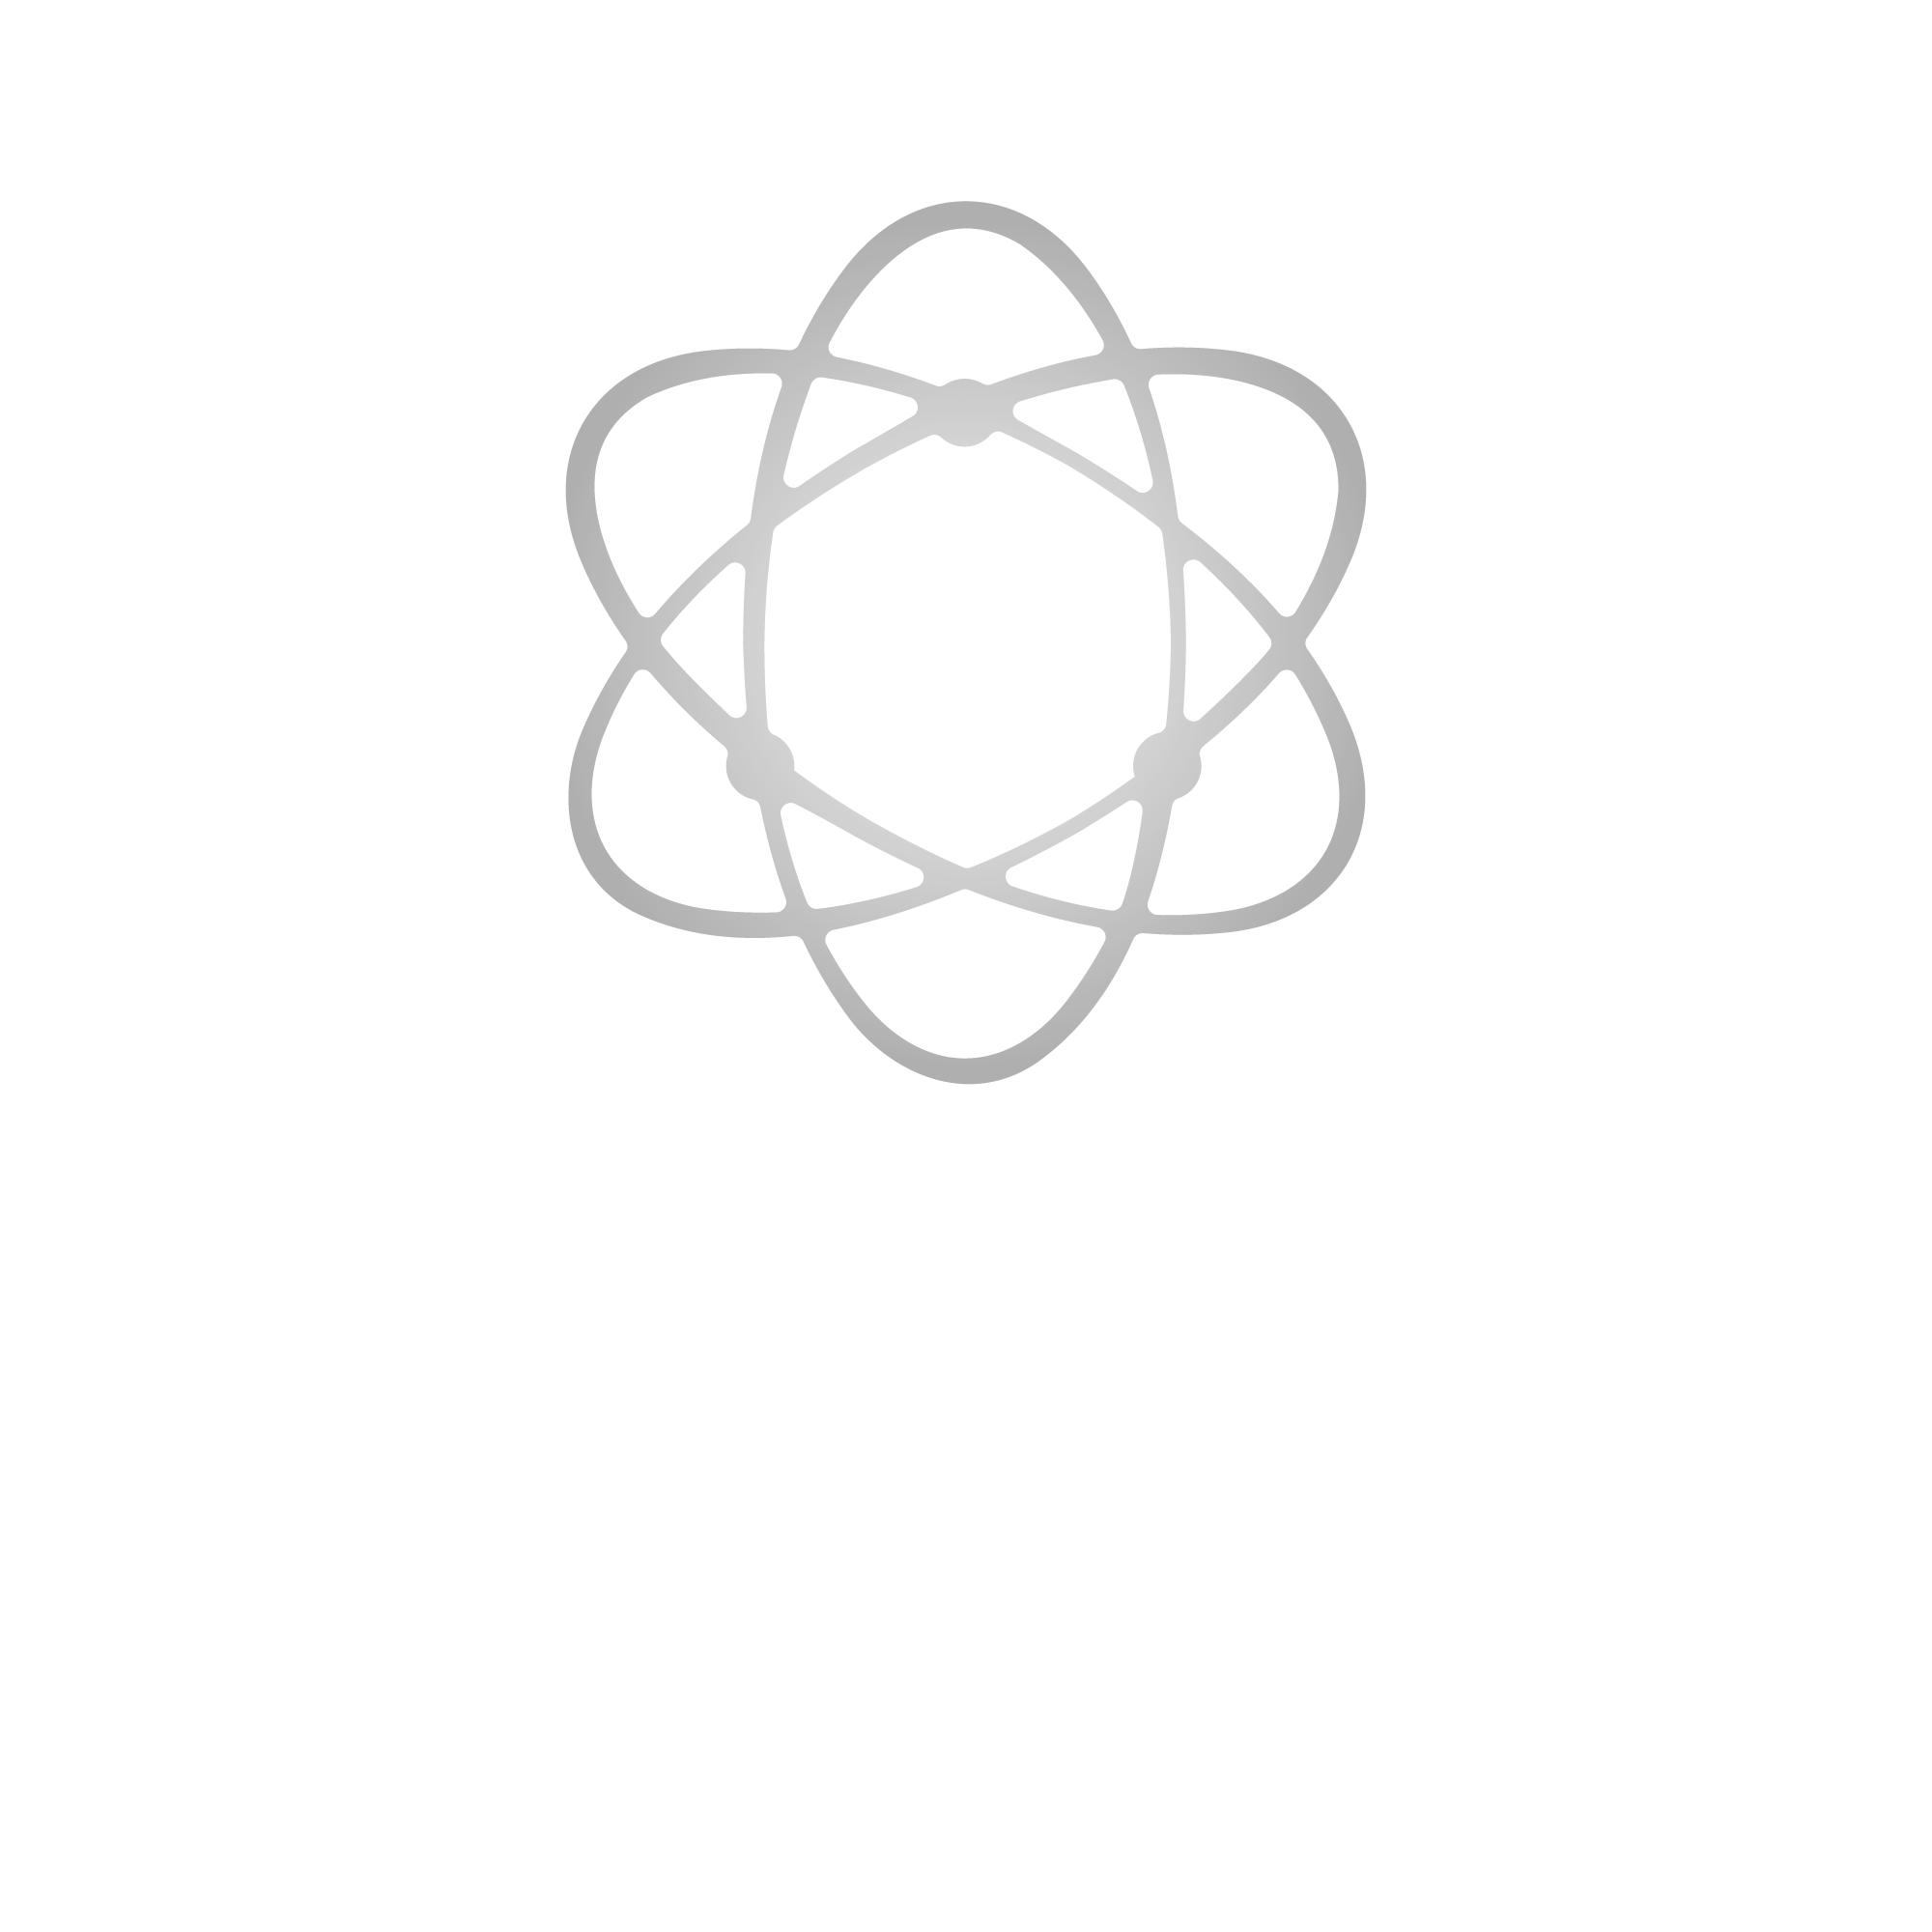 Macro mArketing Consulting logo white transparent